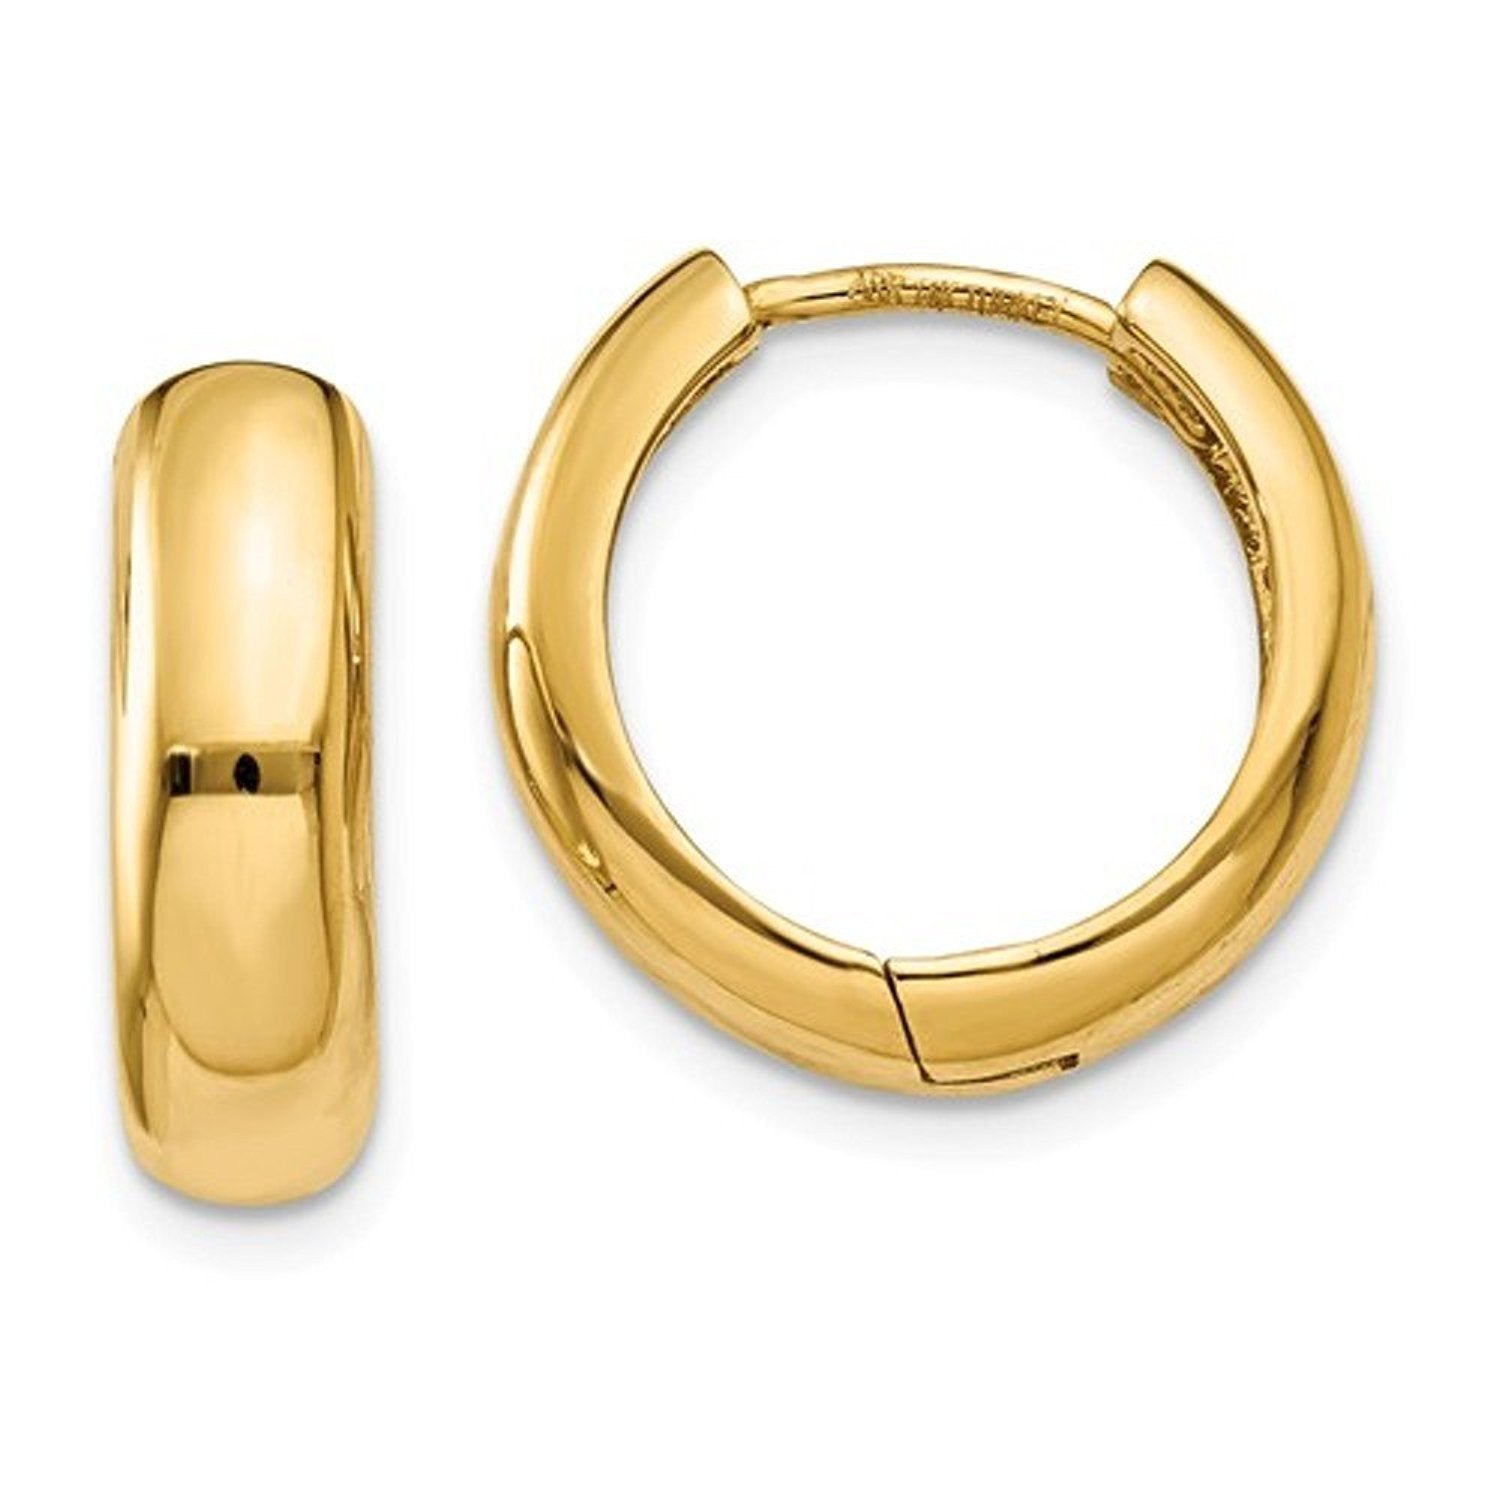 10k Yellow Gold Classic Huggie Hinged Hoop Earrings 15mm x 15mm x 4mm